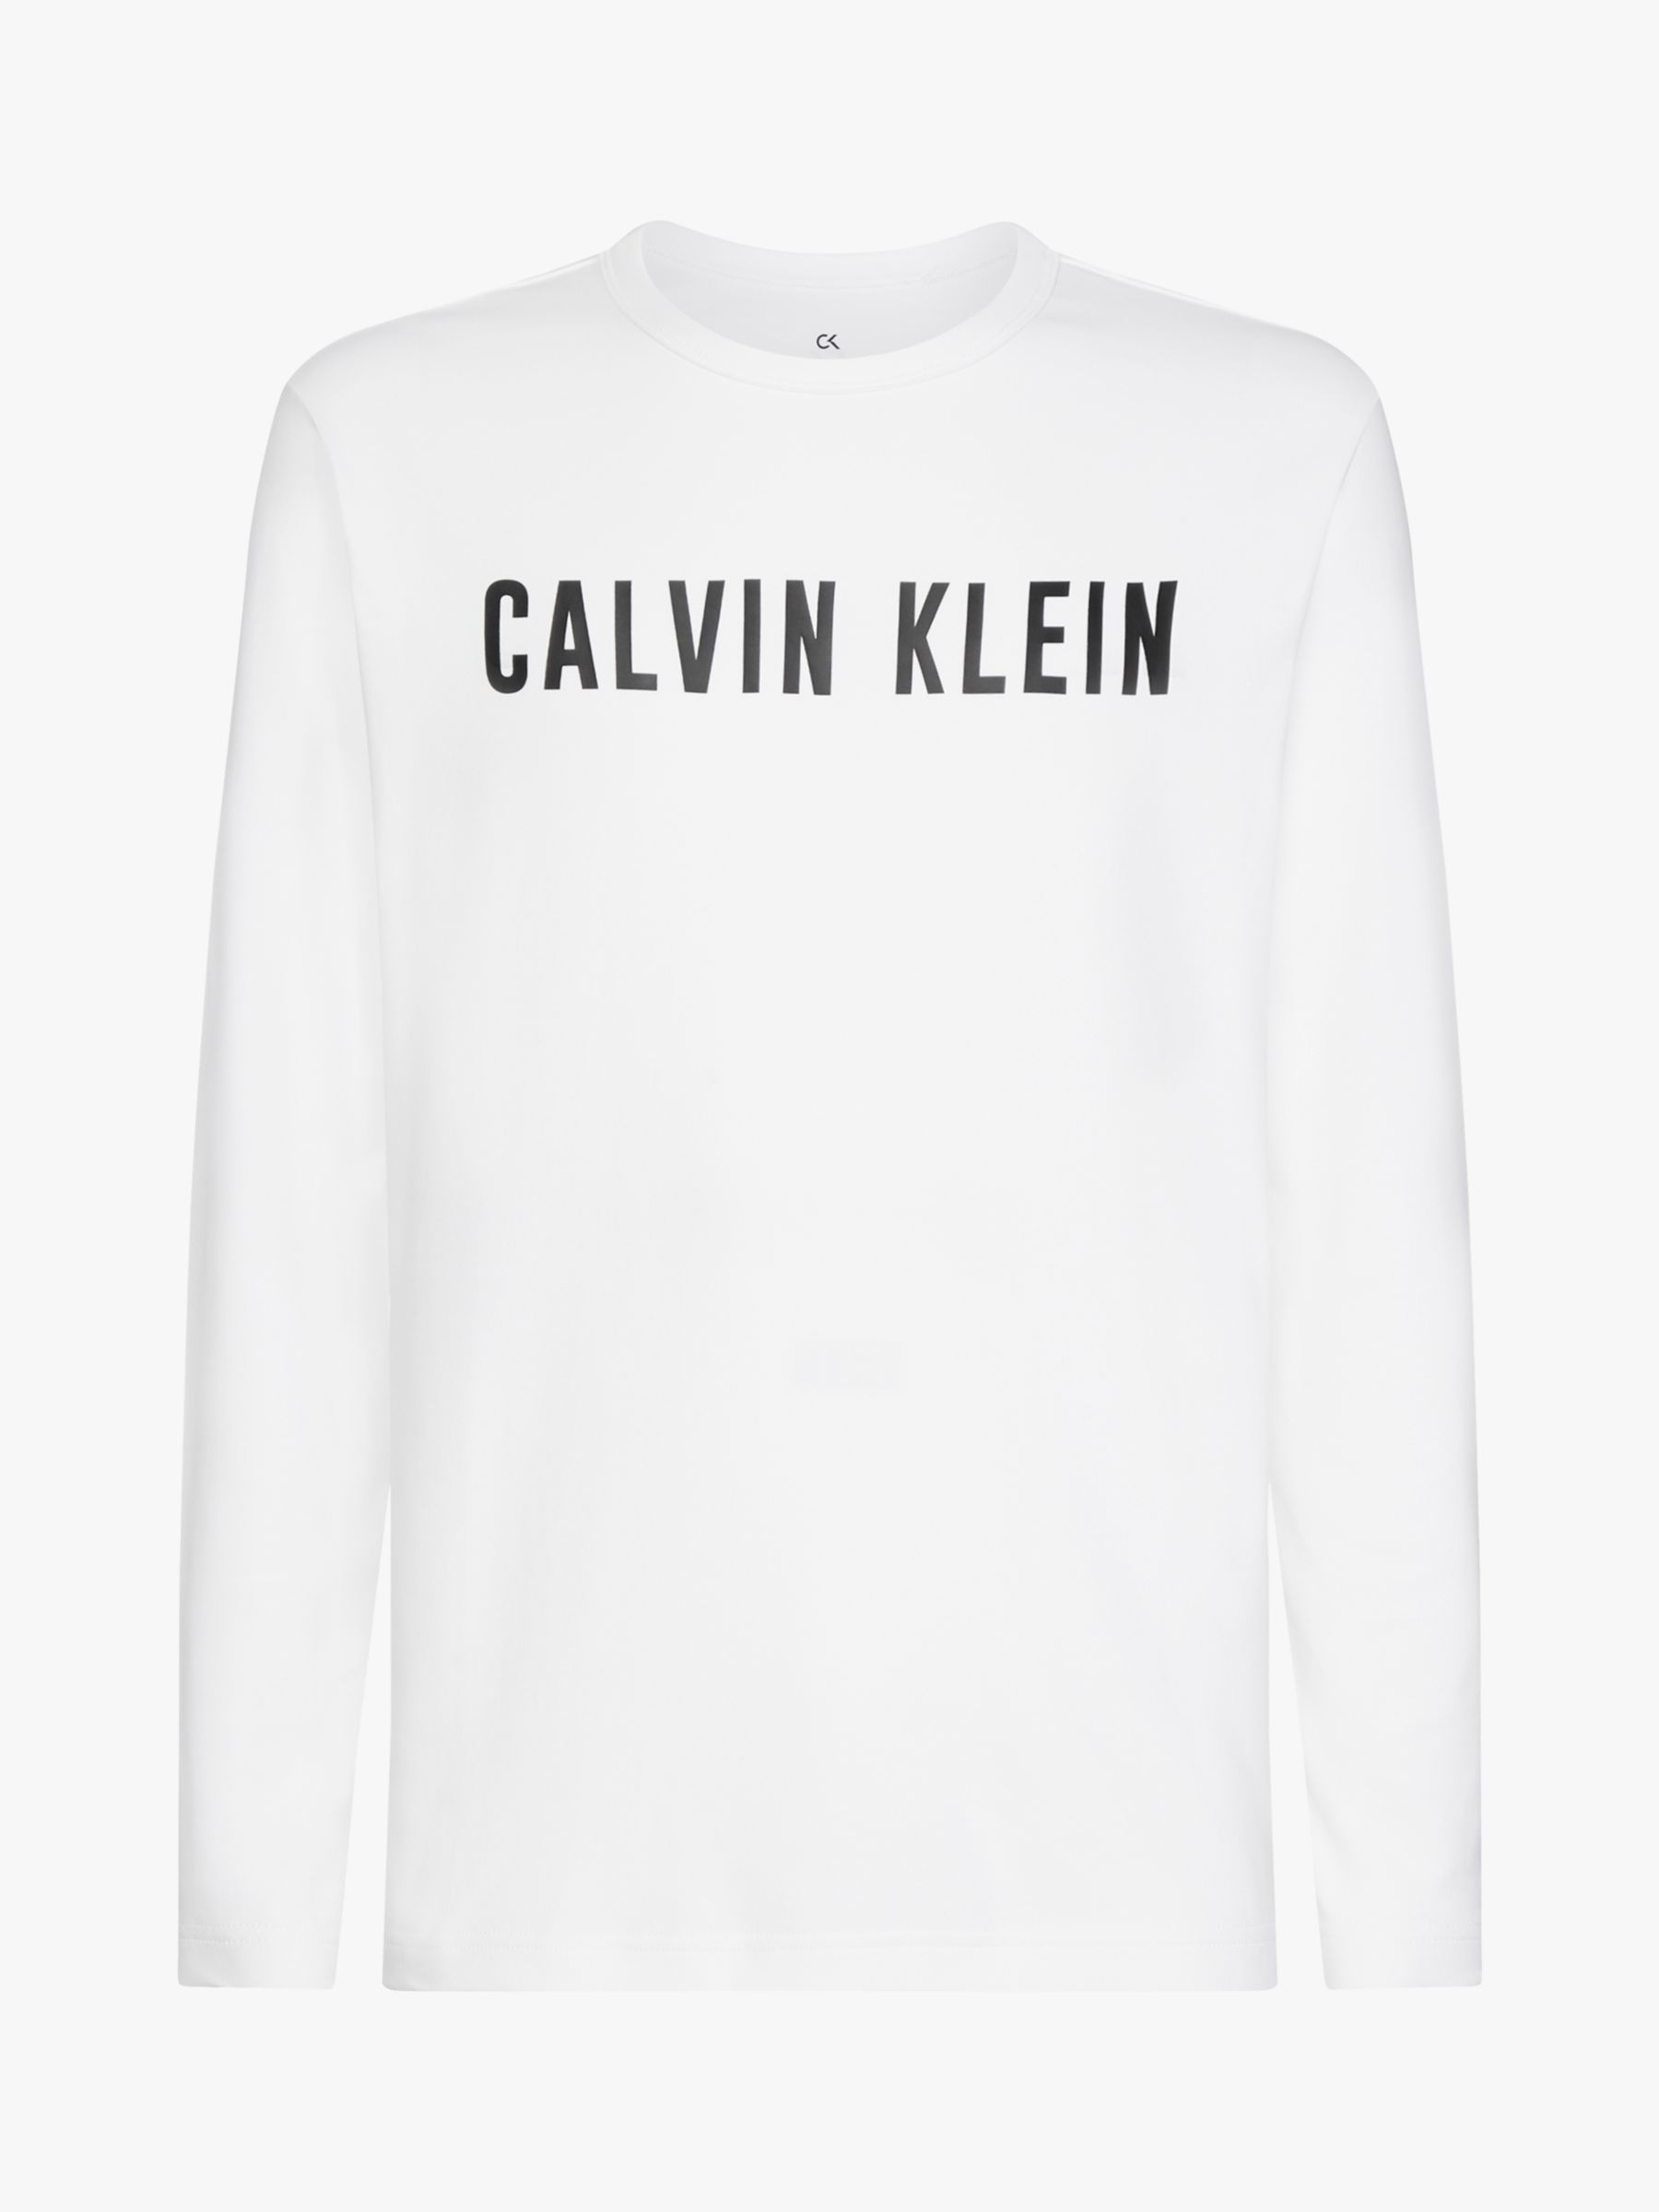 calvin klein white long sleeve shirt